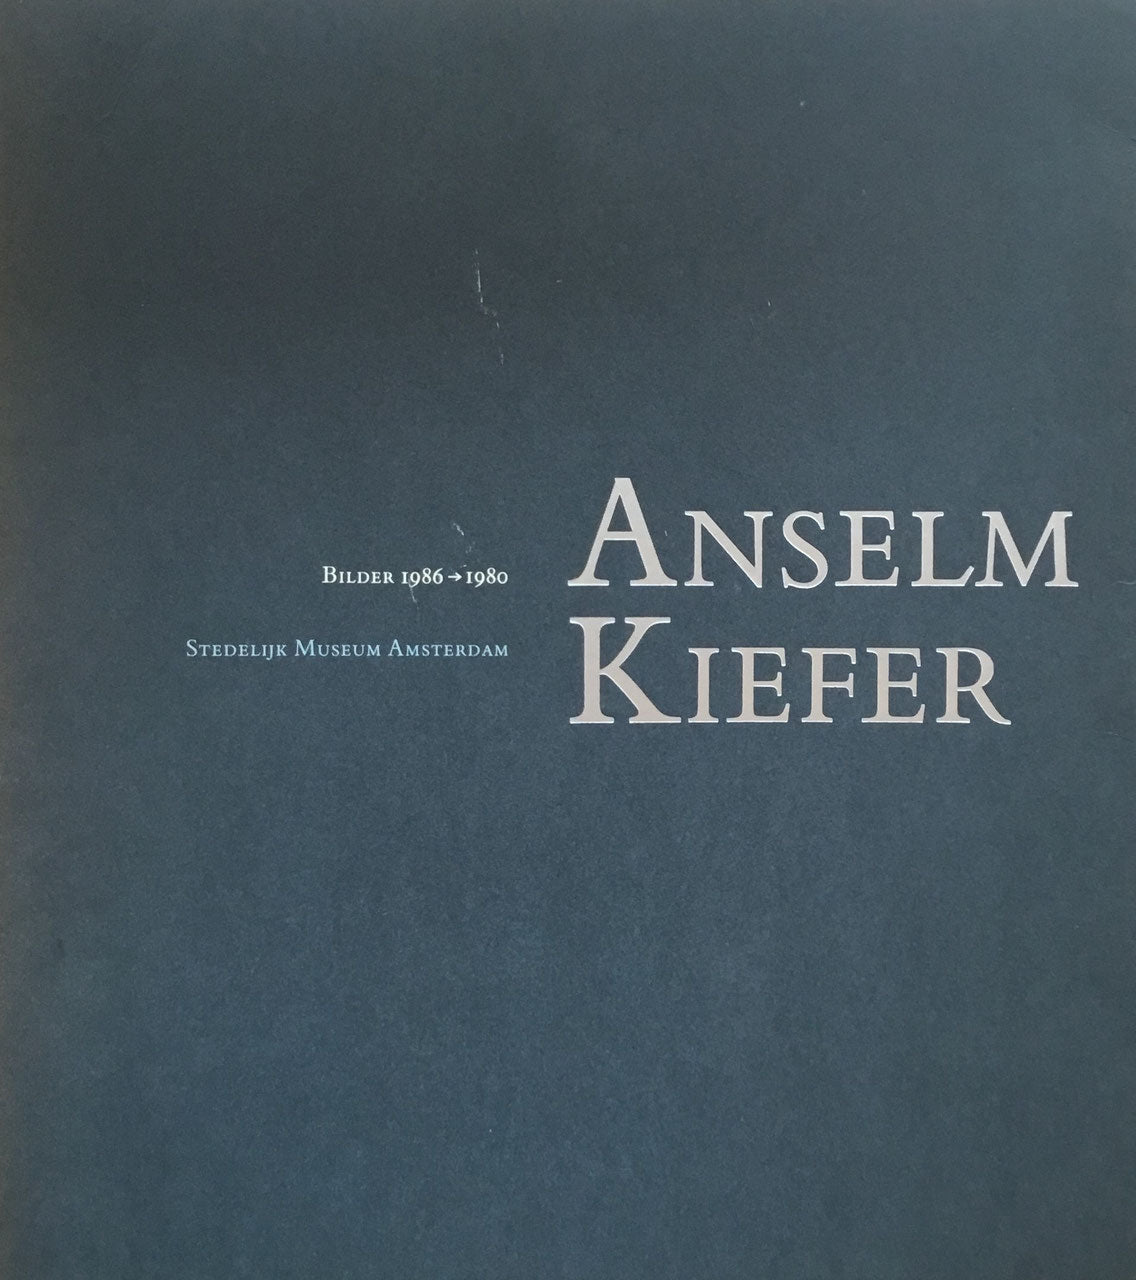 Bilder 1986 1980 Anselm Kiefer アンゼルム キーファー Smokebooks 美術 デザイン 古書店